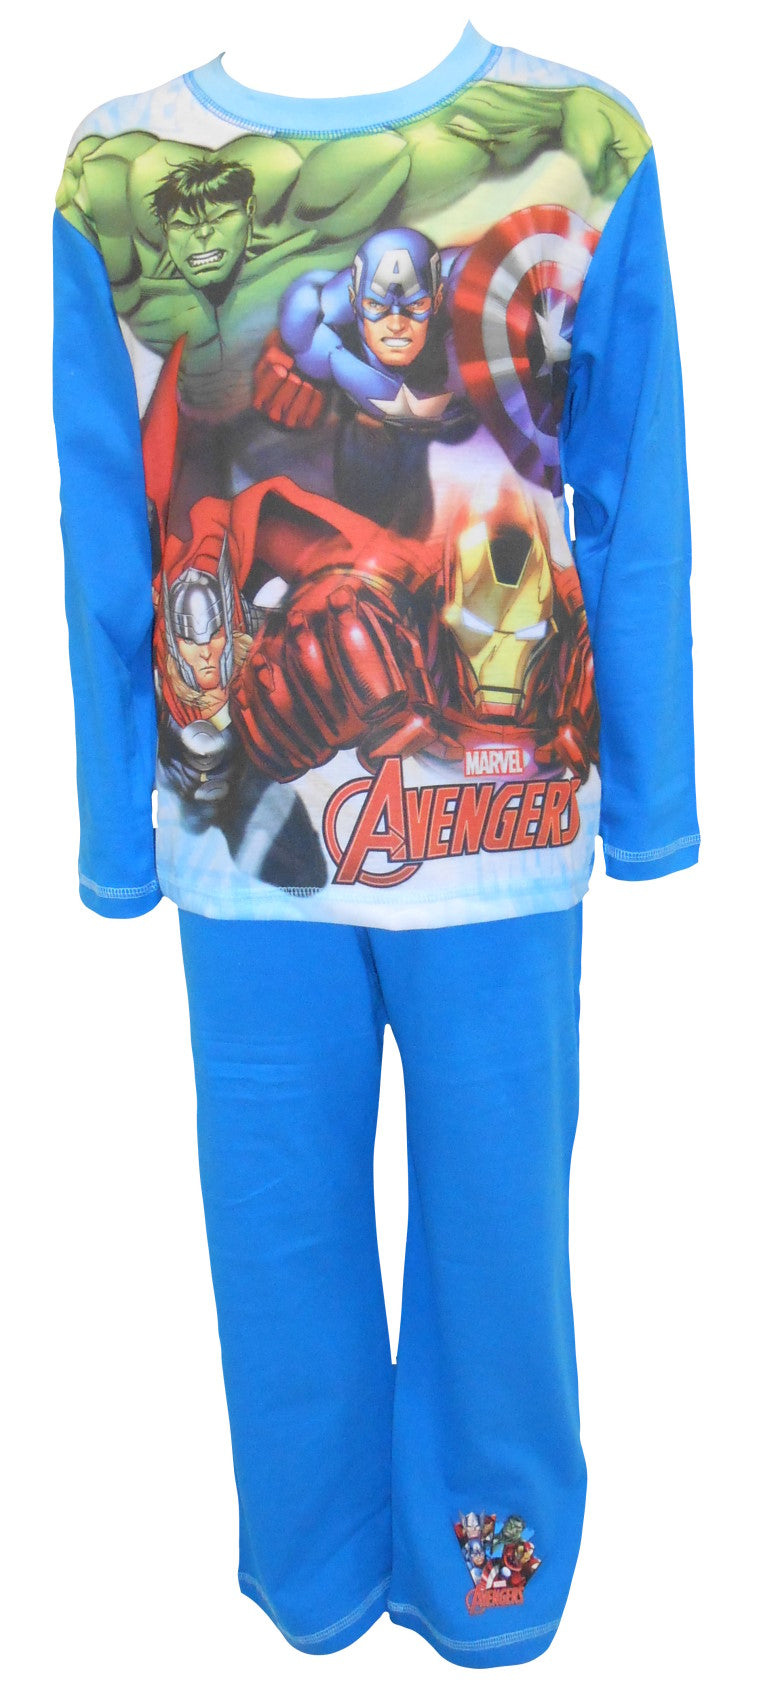 The Avengers Action Image Boy's Pyjamas